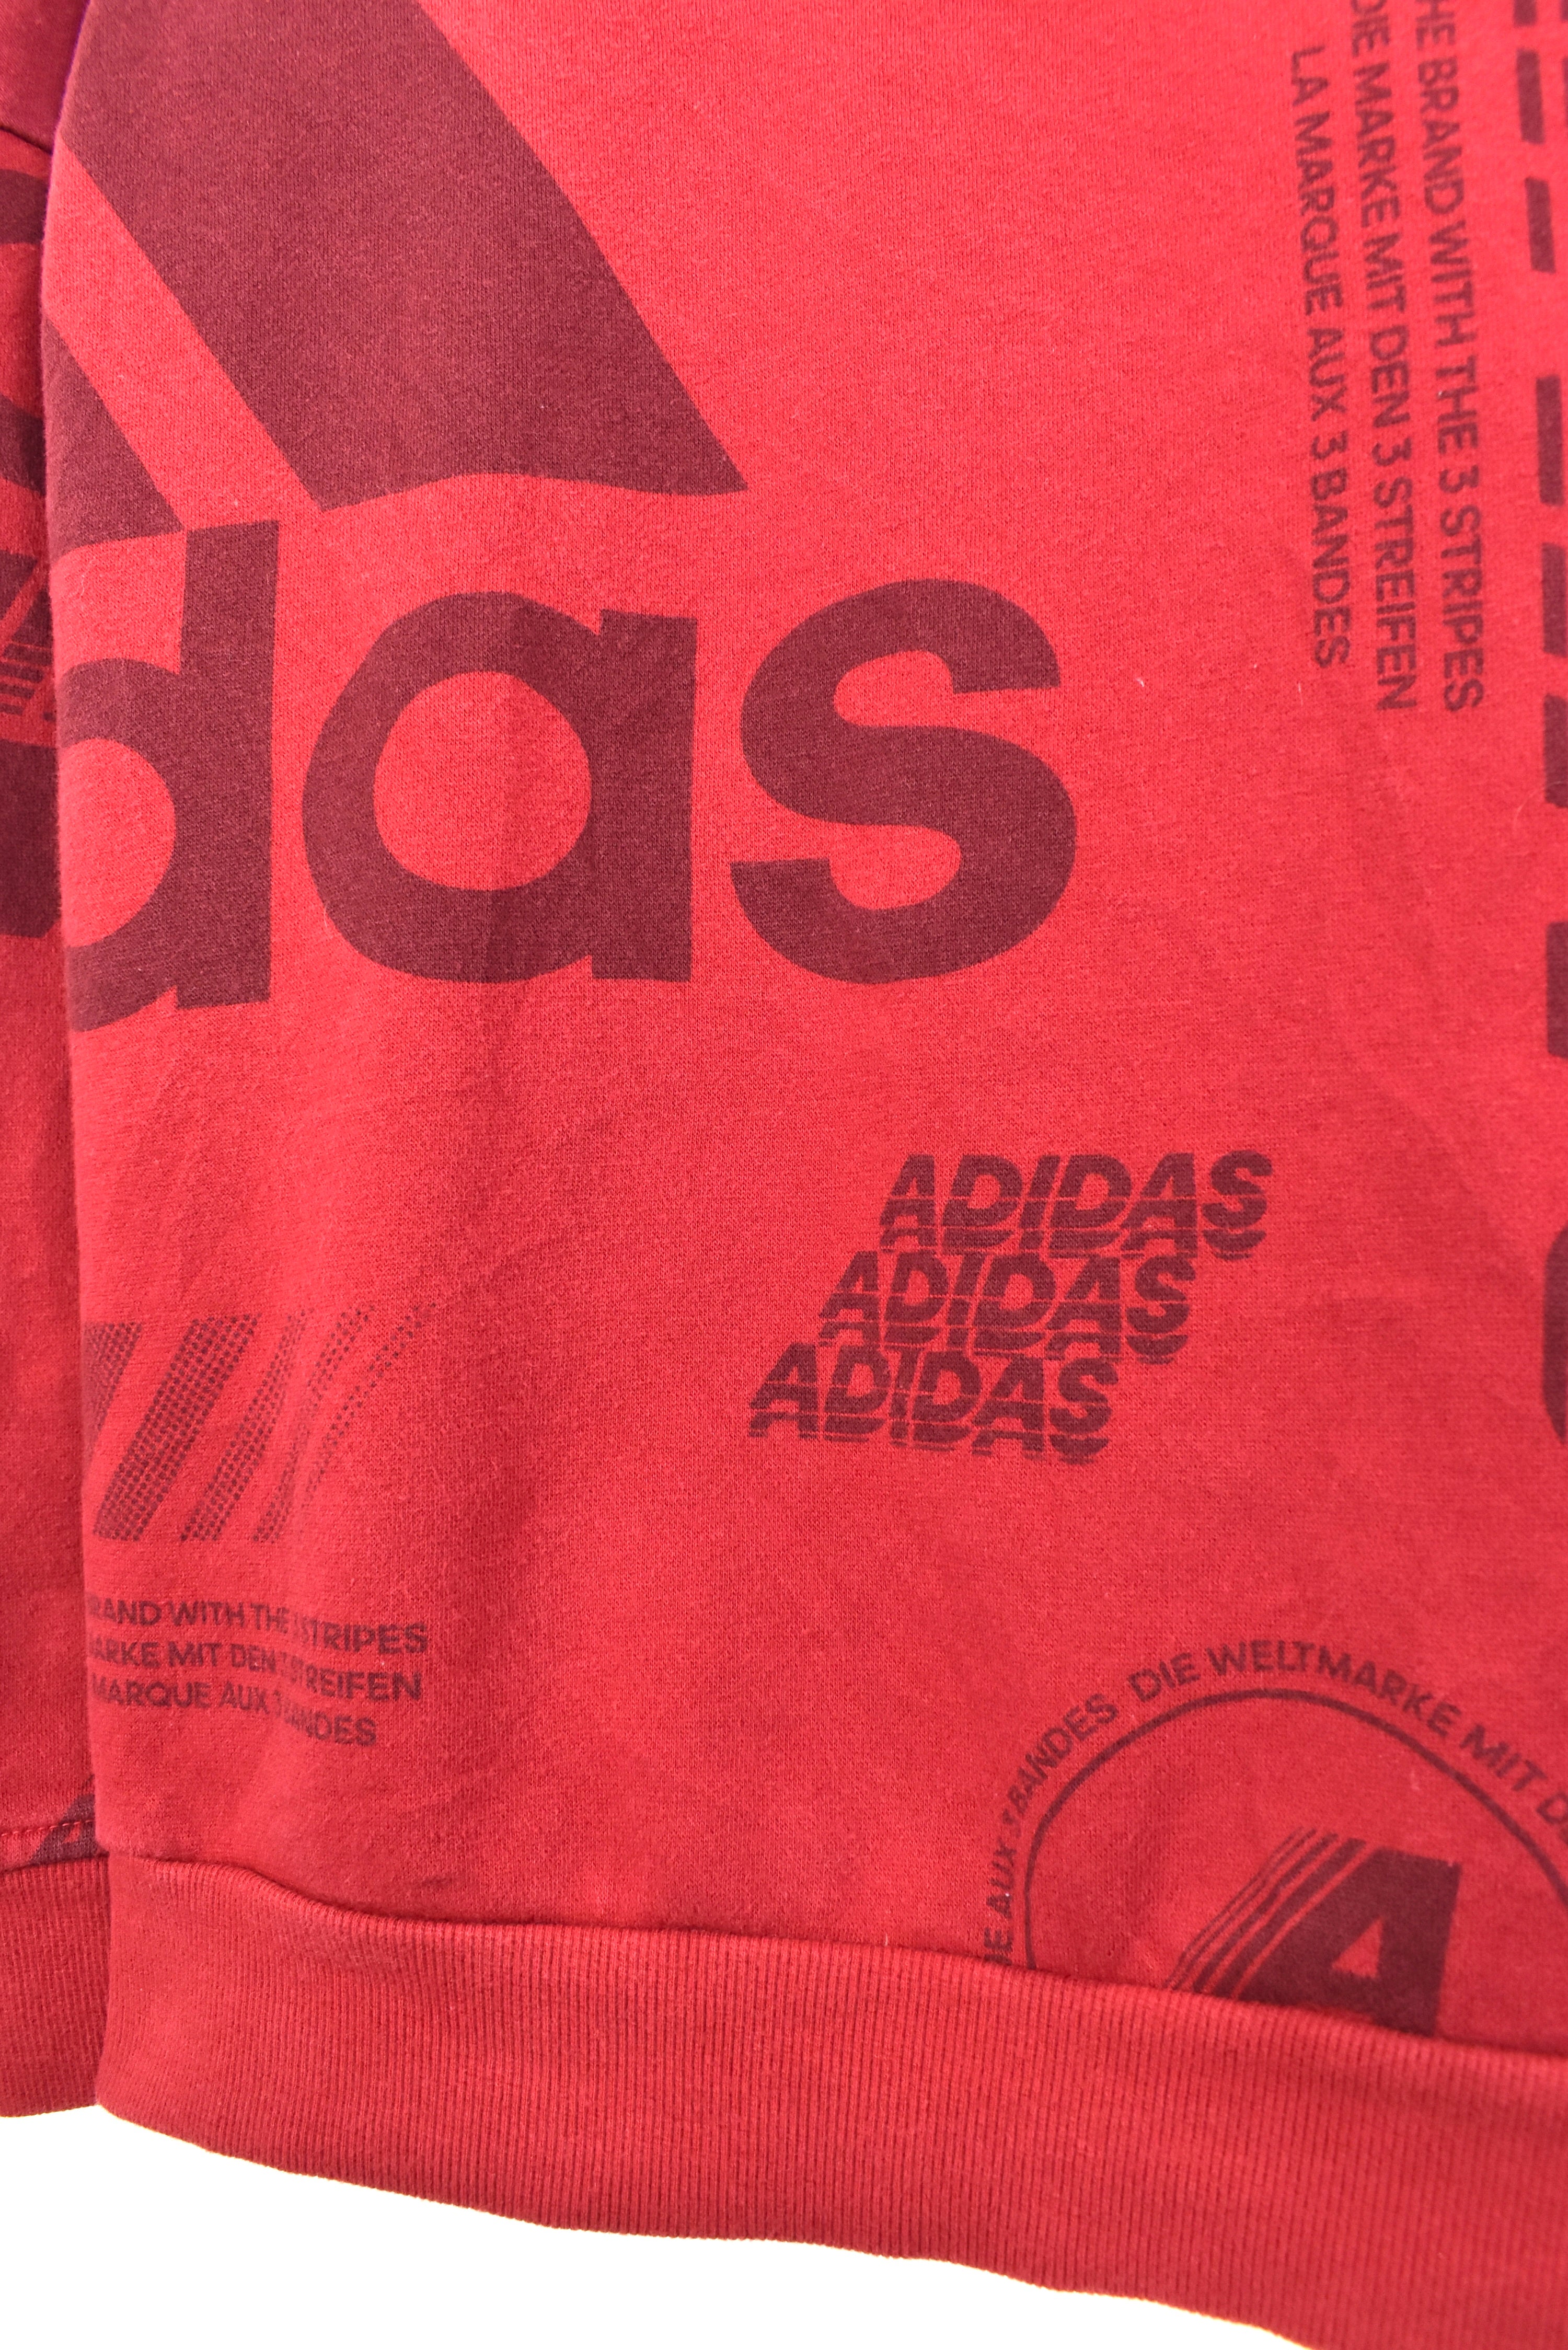 Modern Adidas sweatshirt - medium, burgundy ADIDAS